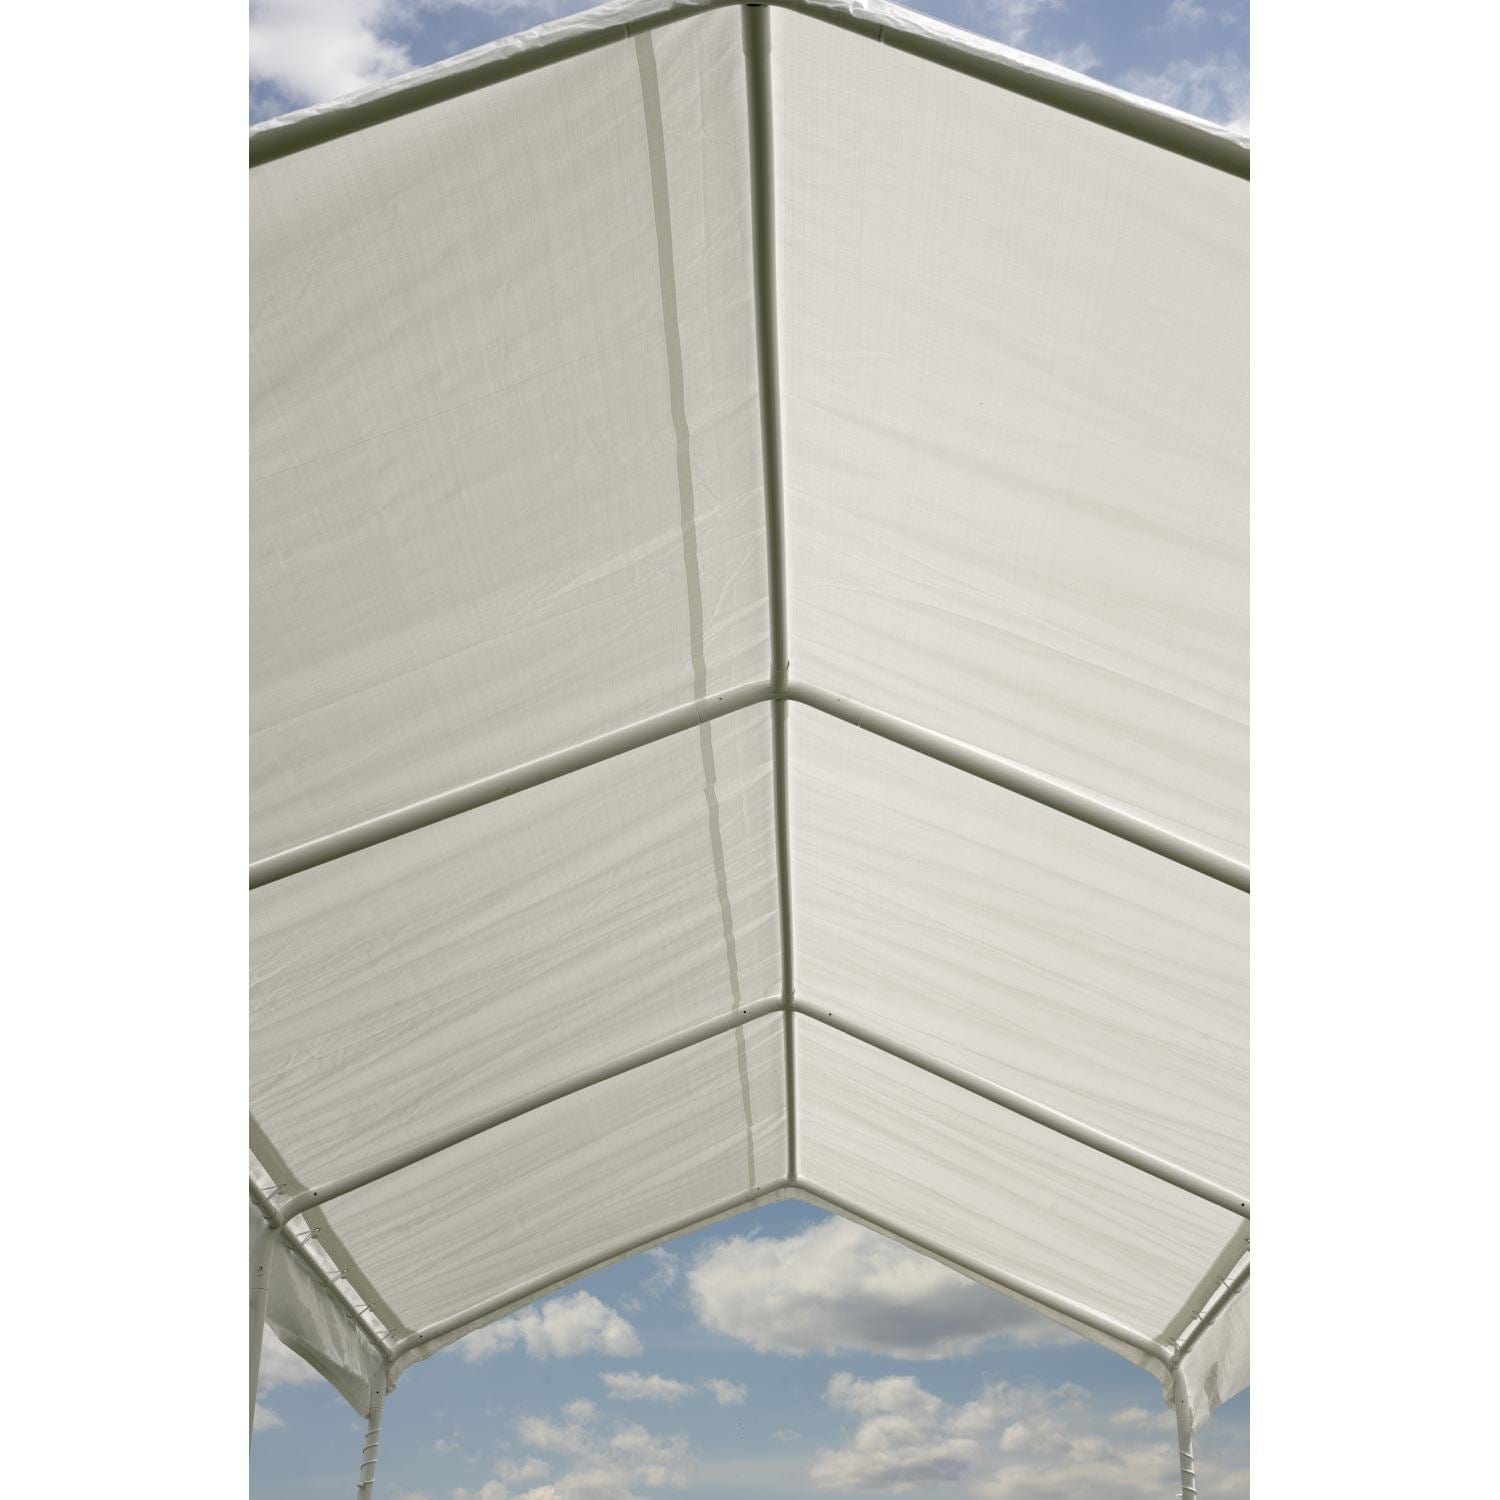 ShelterLogic Gazebo Canopy ShelterLogic | SuperMax Gazebo Canopy 10 x 20 ft. 23588